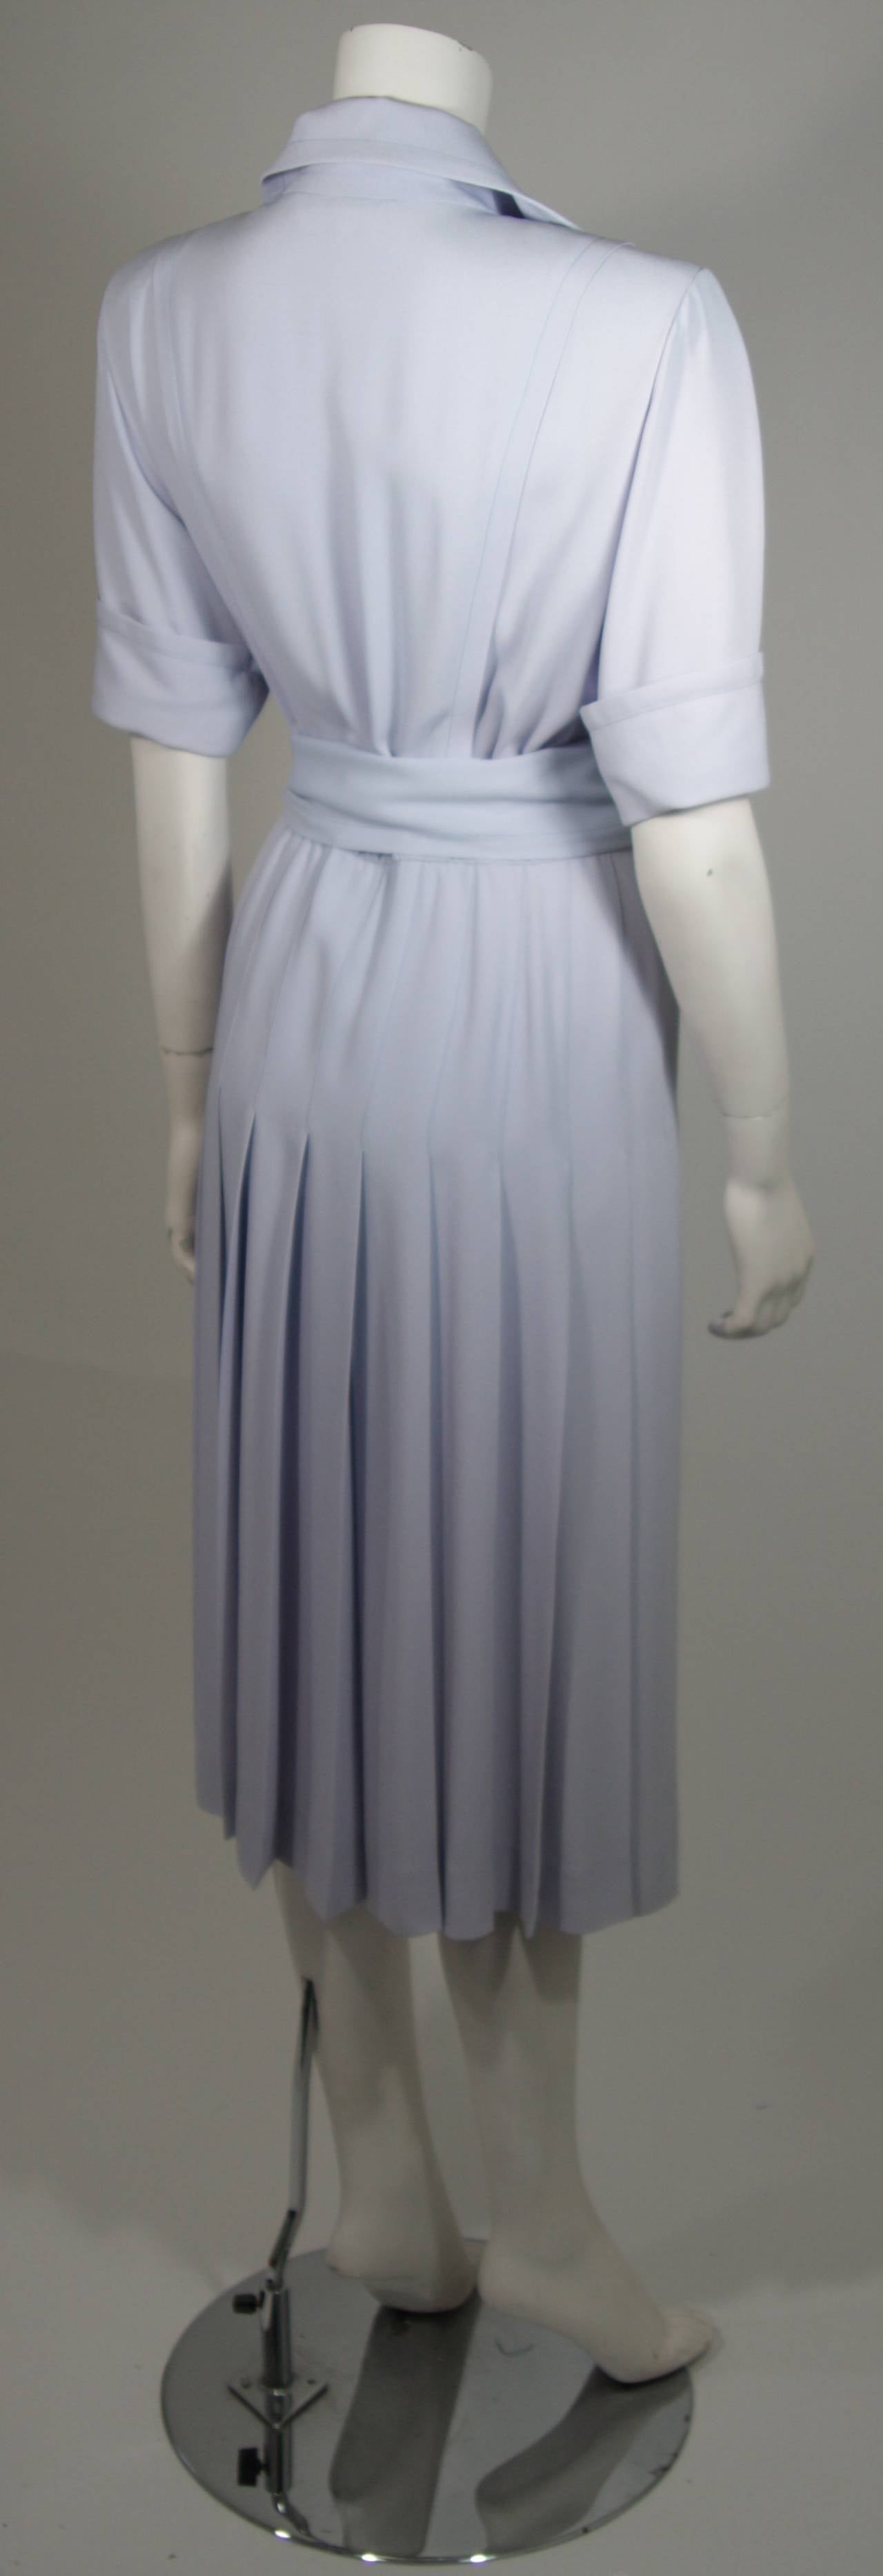 Saint Laurent Periwinkle Belted Shirt Dress Size For Sale 2